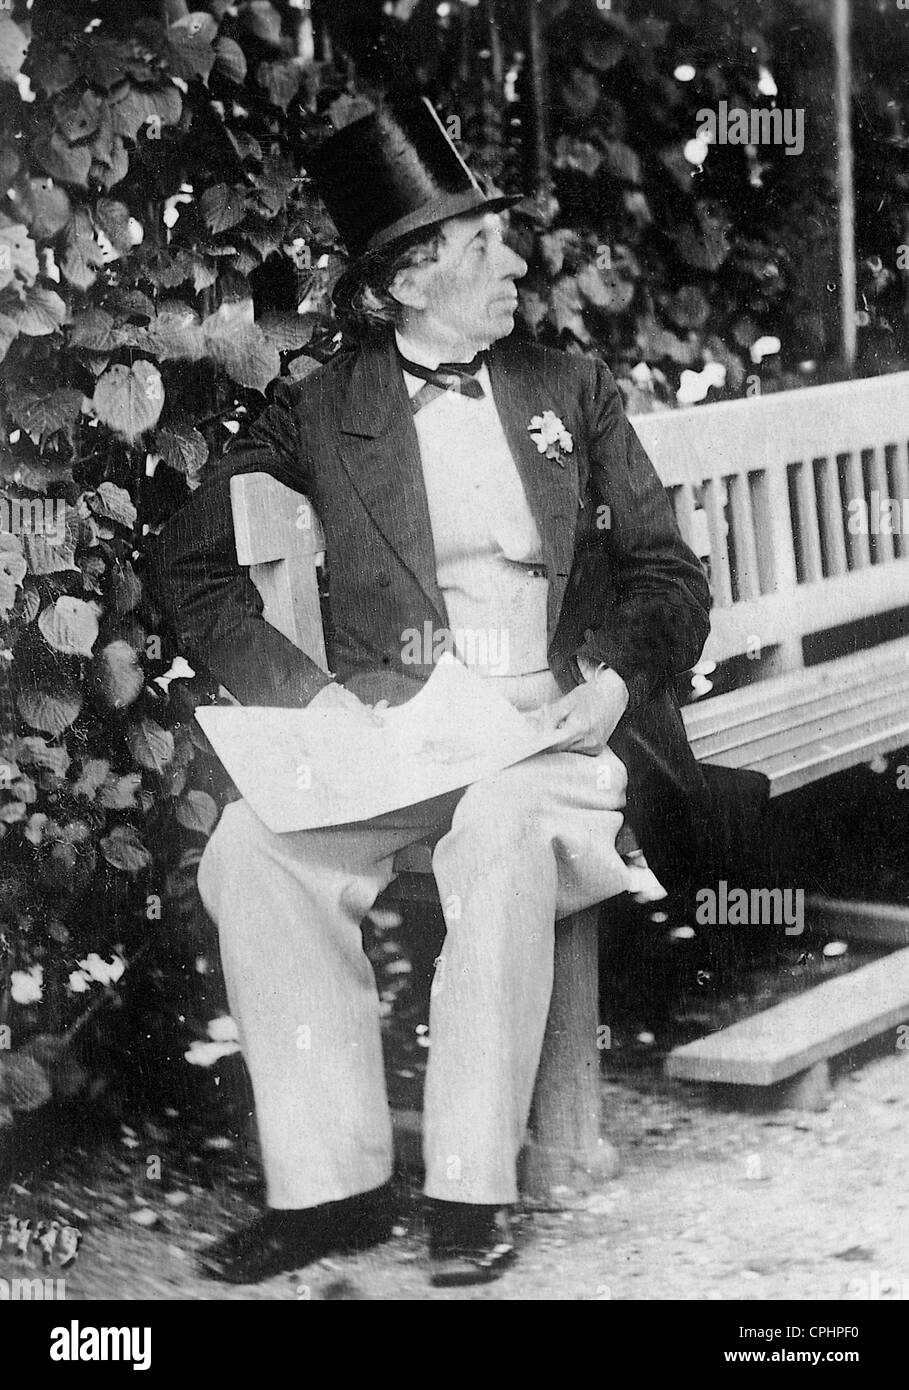 Hans Christian Andersen Stock Photo